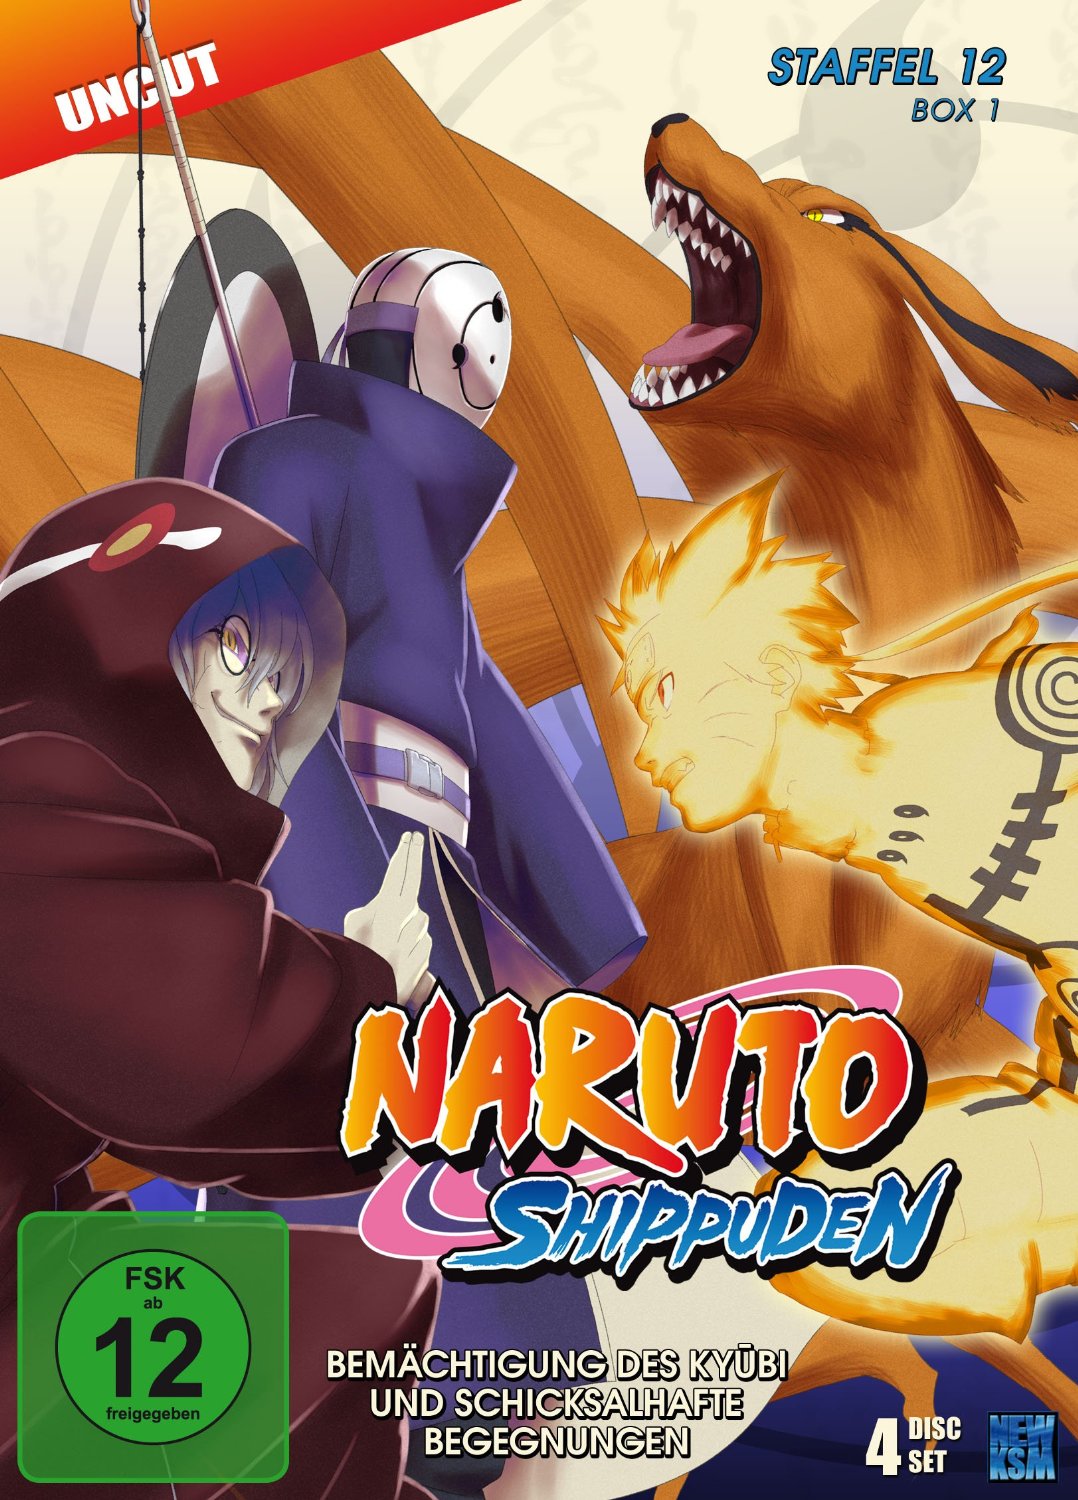 Naruto Shippuden - Staffel 12 Box 1: Episode 463-487 (Uncut) [DVD] Cover